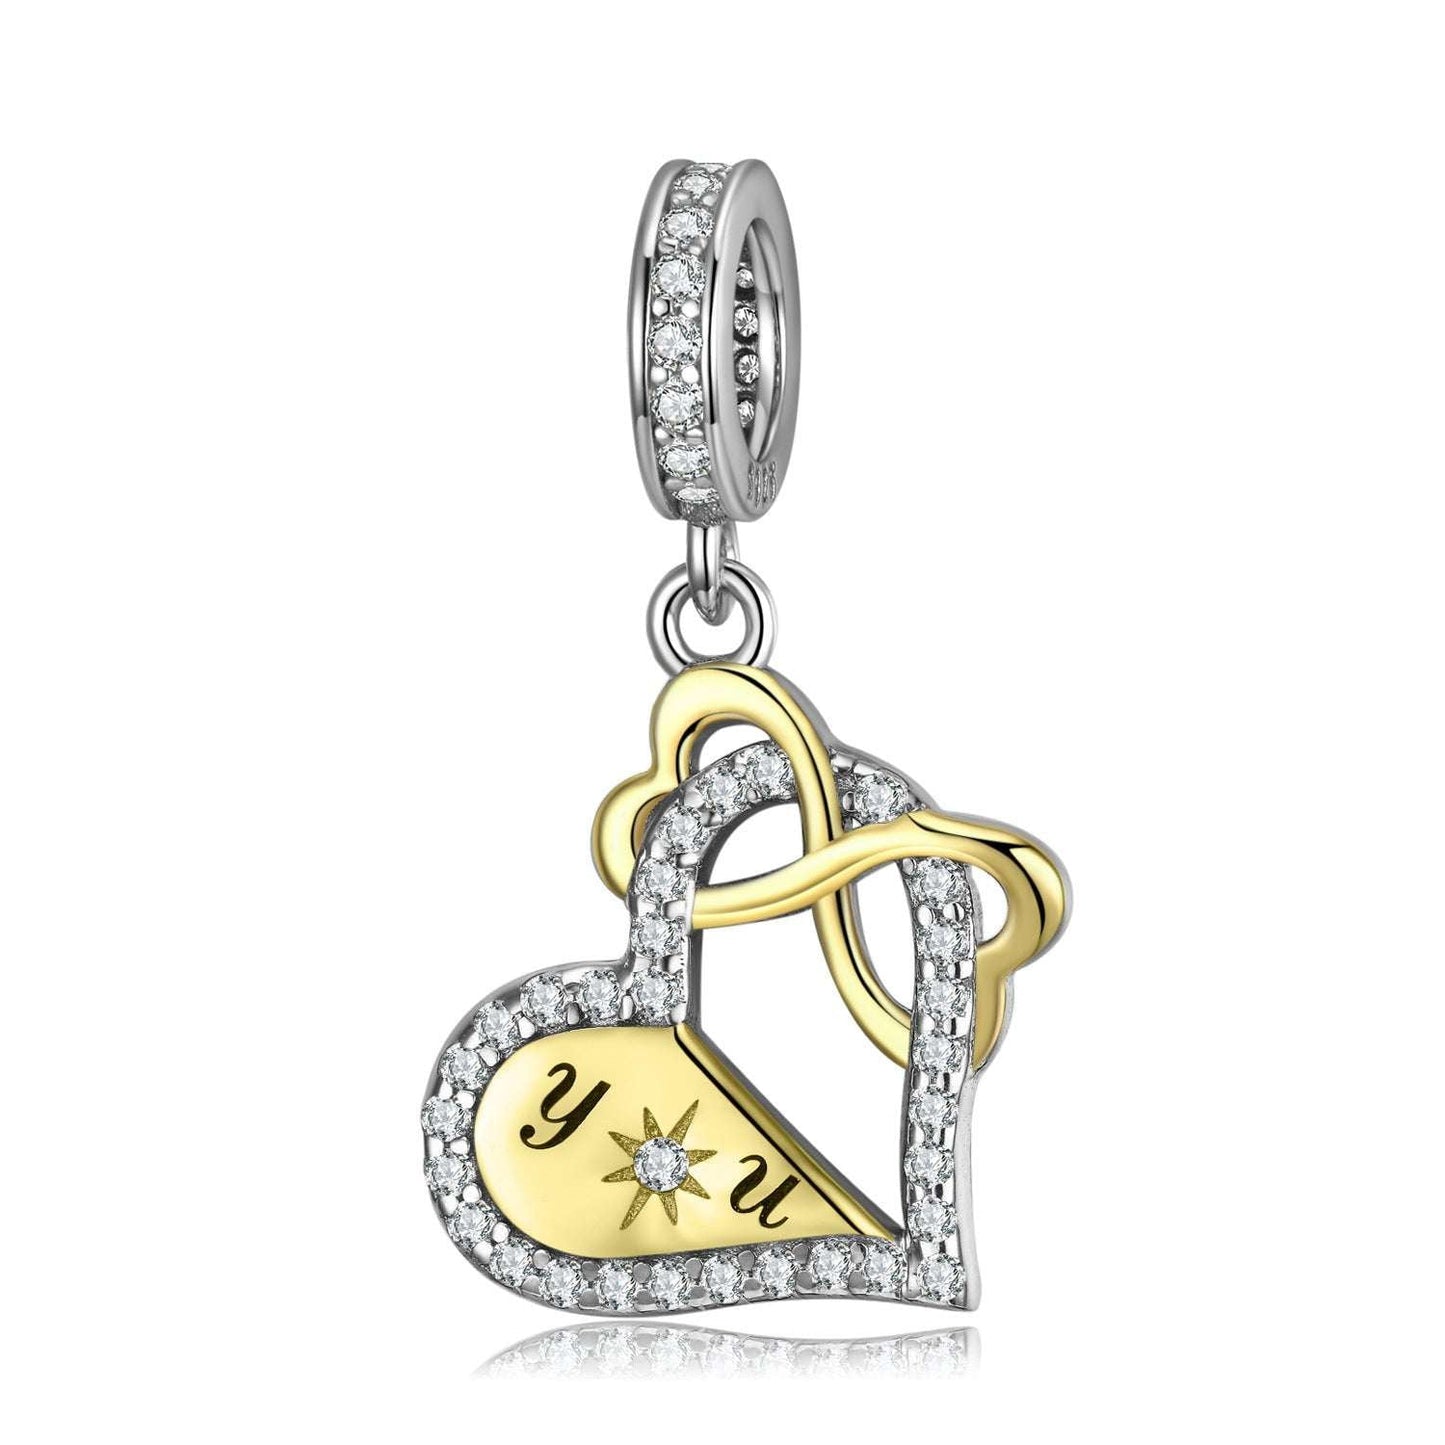 Elegant Charm Pendant, Sterling Silver Bracelet, Women's Bracelet Accessory - available at Sparq Mart